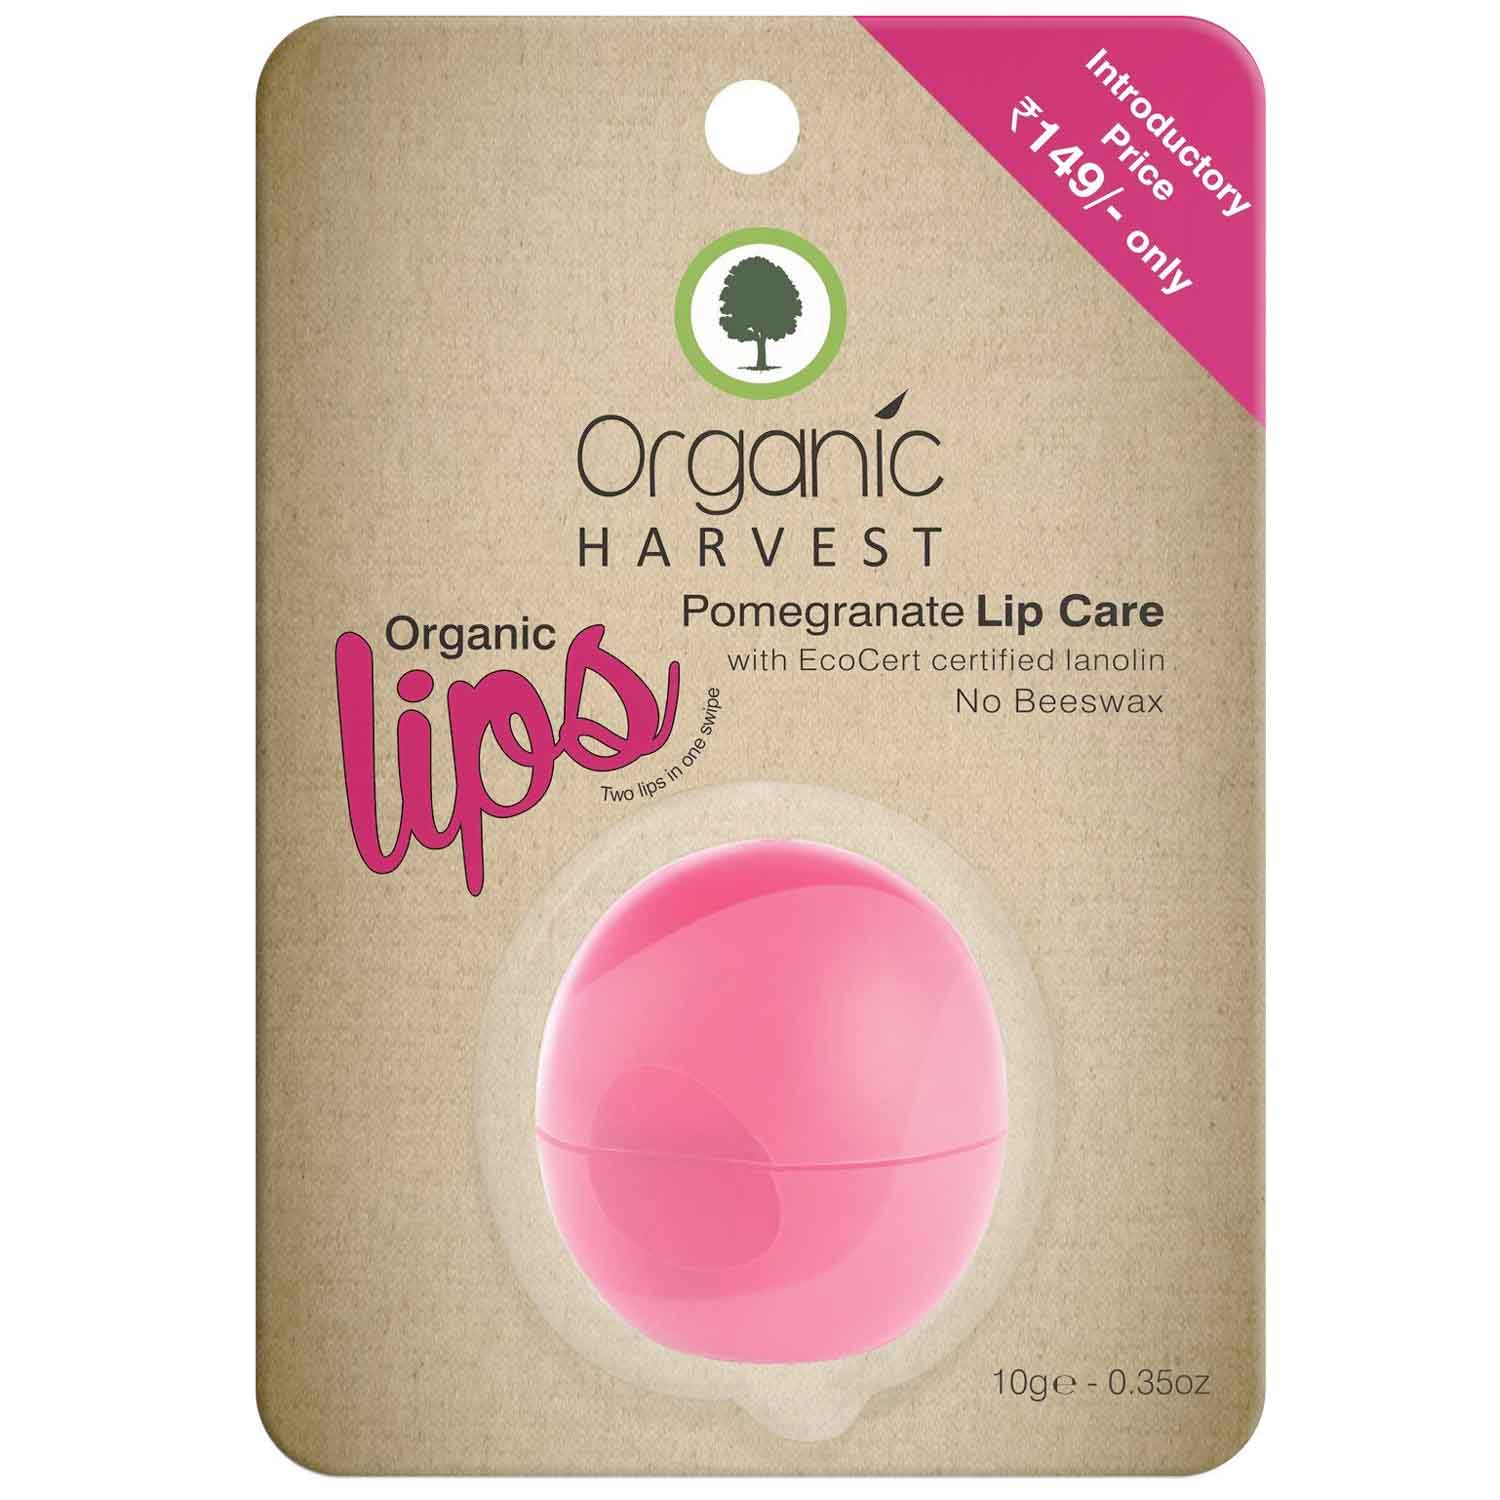 Buy Organic Harvest Pomegranate Lip Balm, 10 gm Online